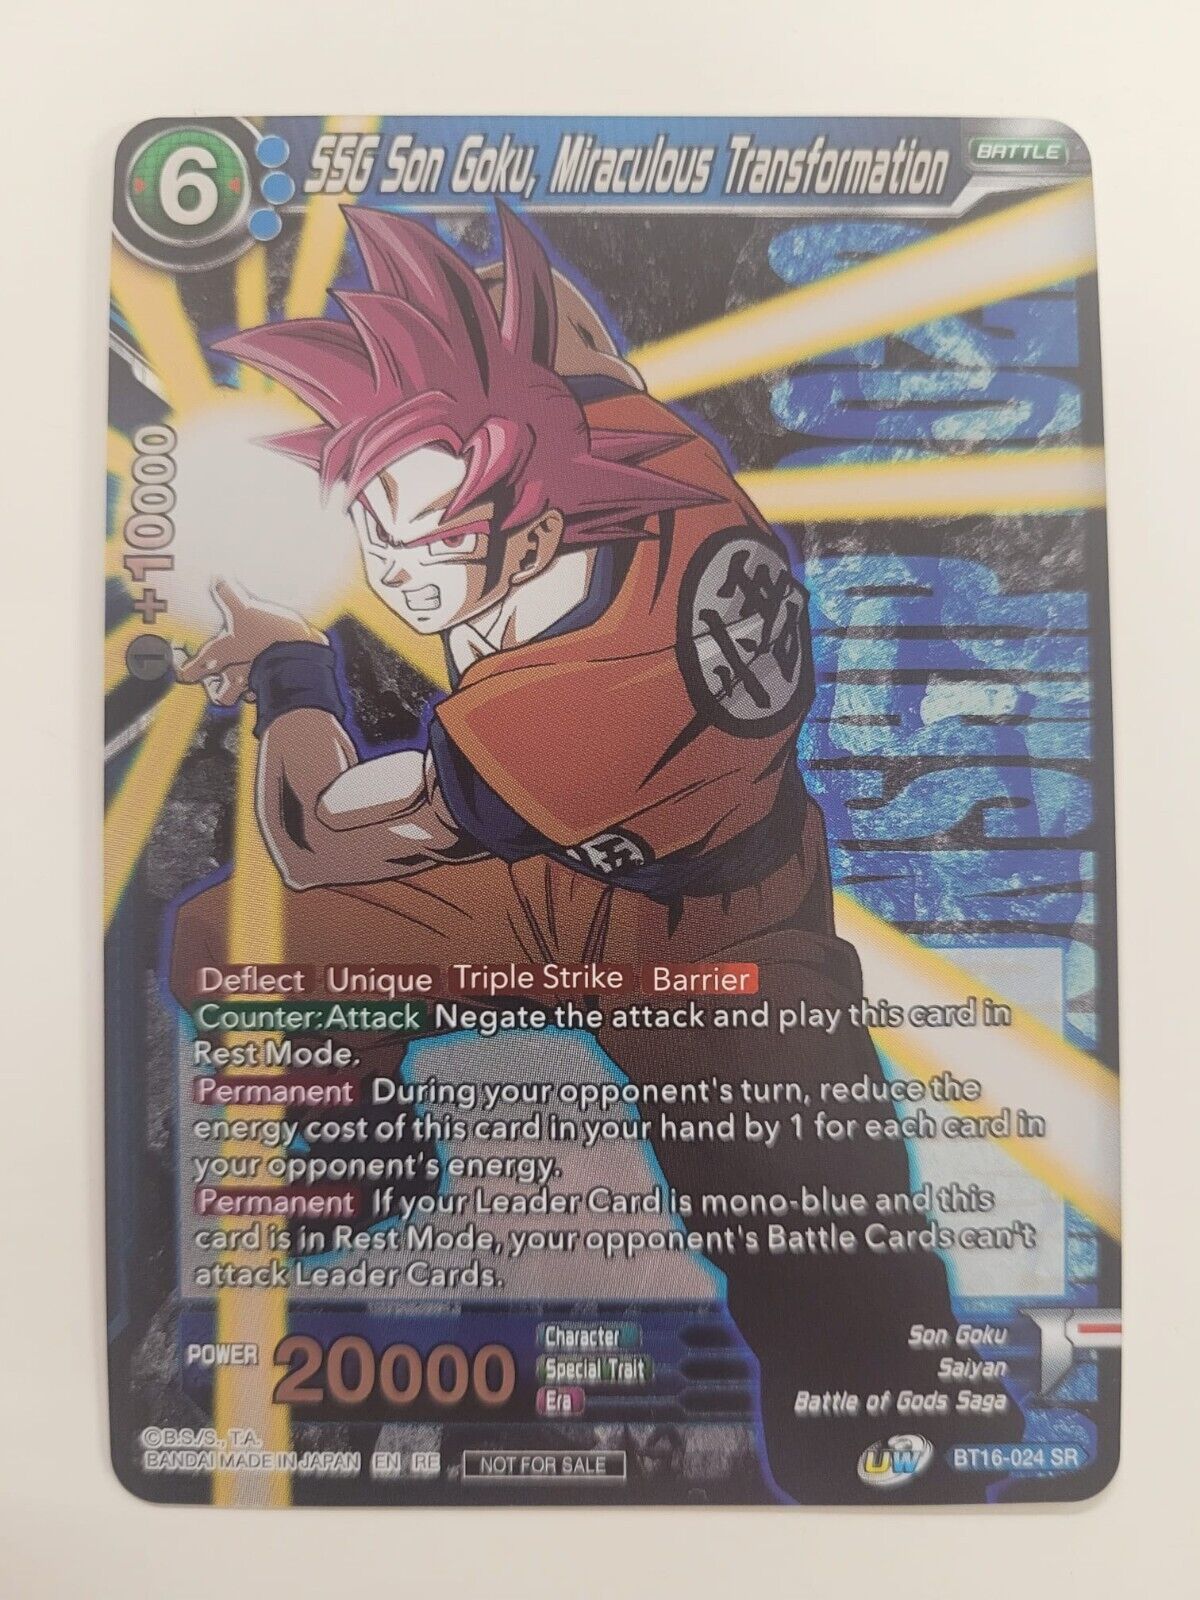 DBS Card Game - SSG Son Goku, Miraculous Transformation - 2022 Championship